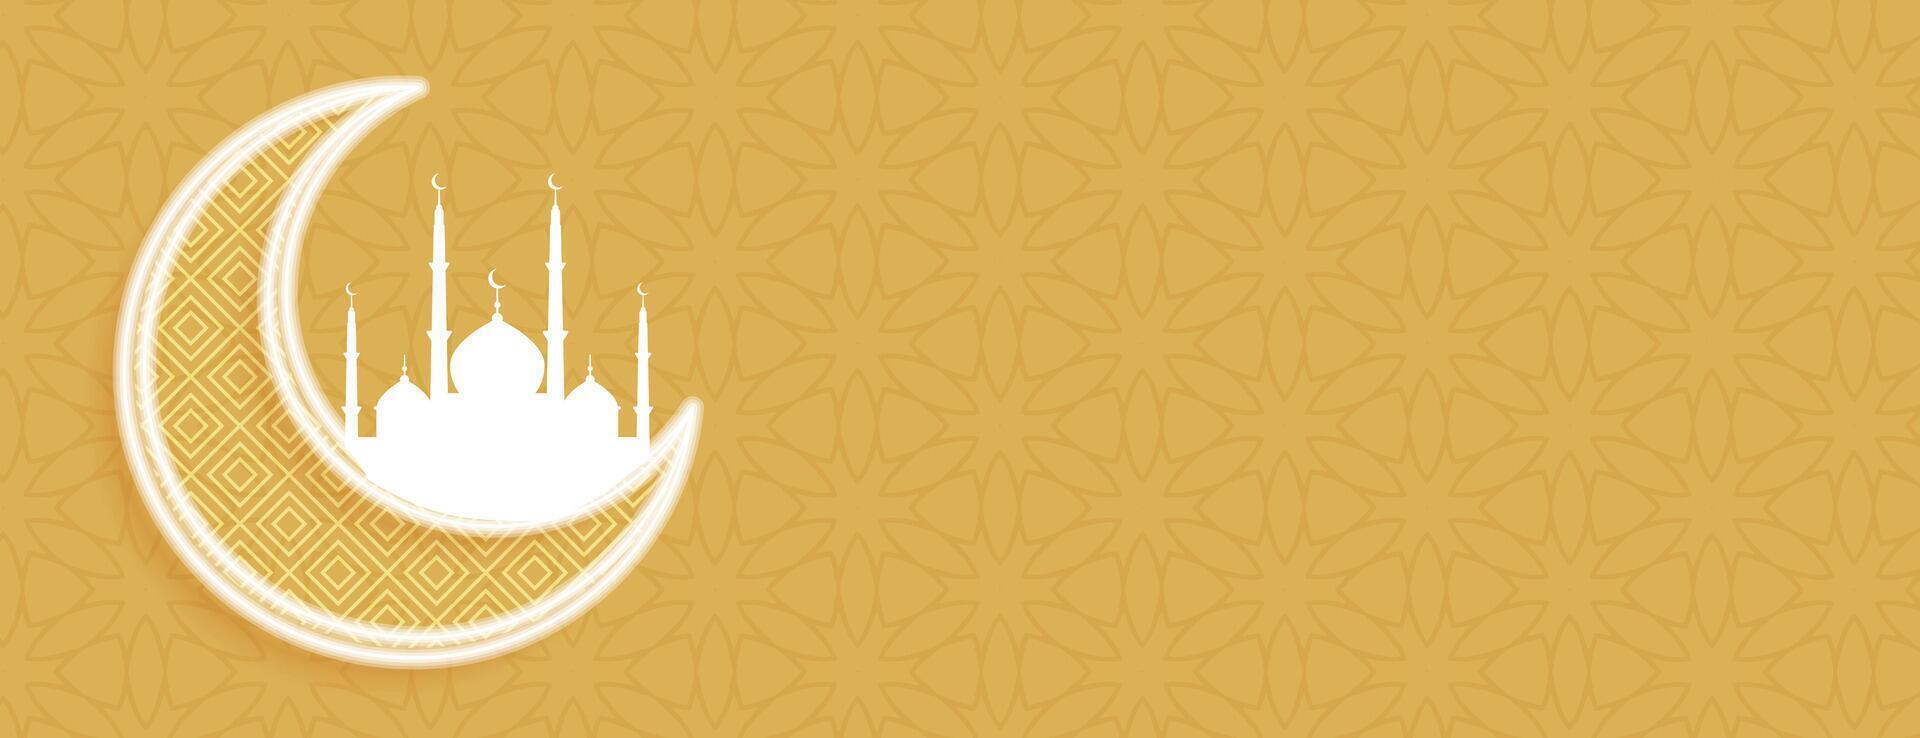 elegant eid ul fitr festival banner with islamic decoration vector